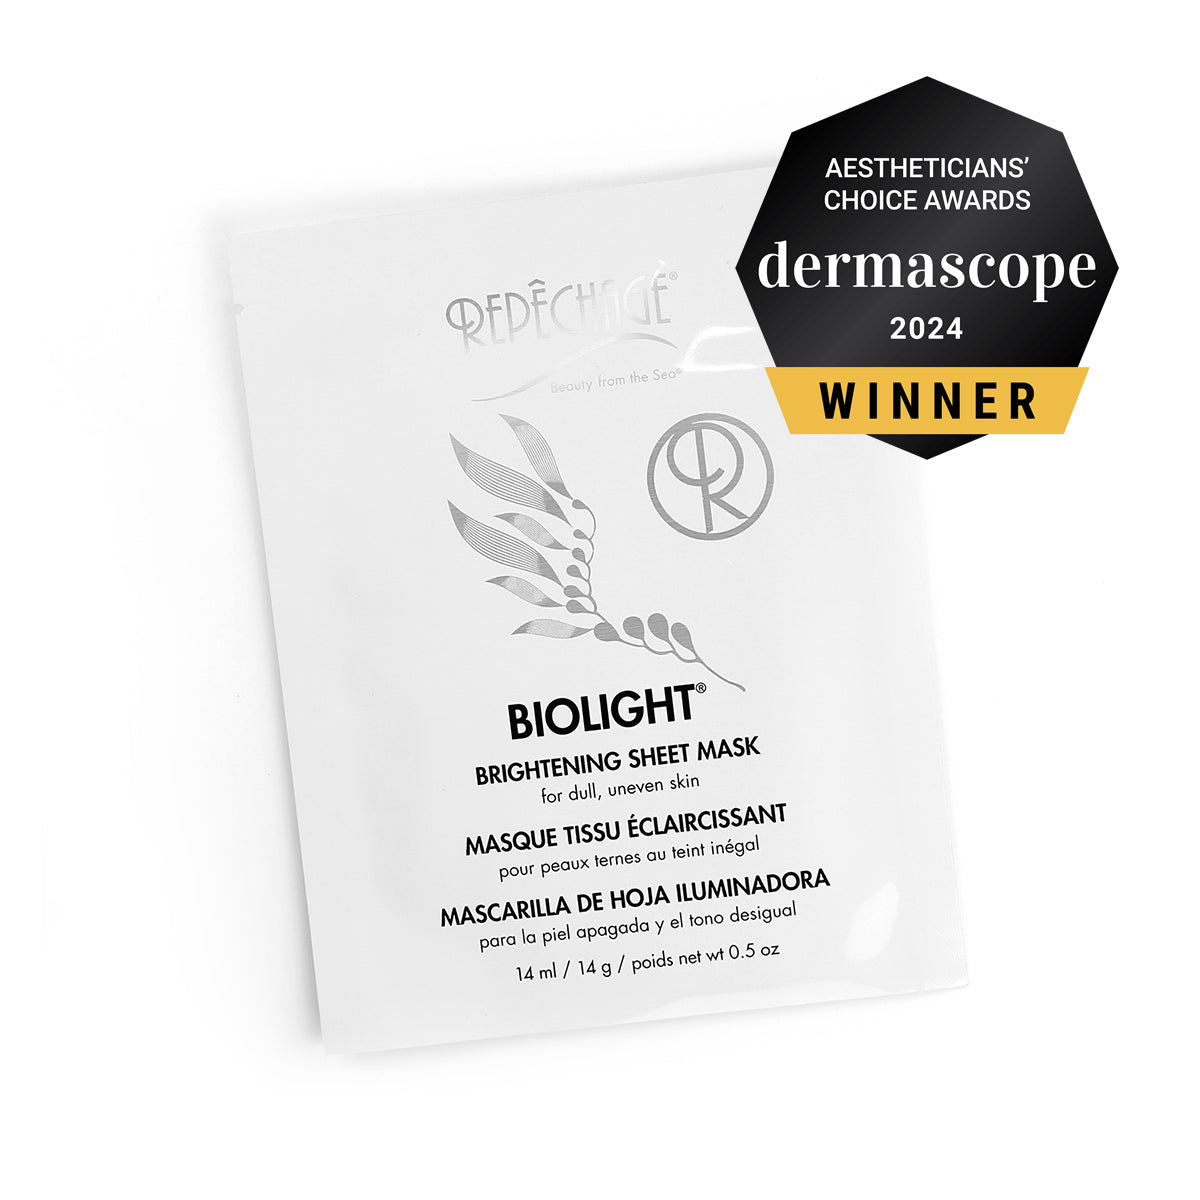 Biolight® Brightening Sheet Mask - Single Sheet Mask dermascope winner 2024